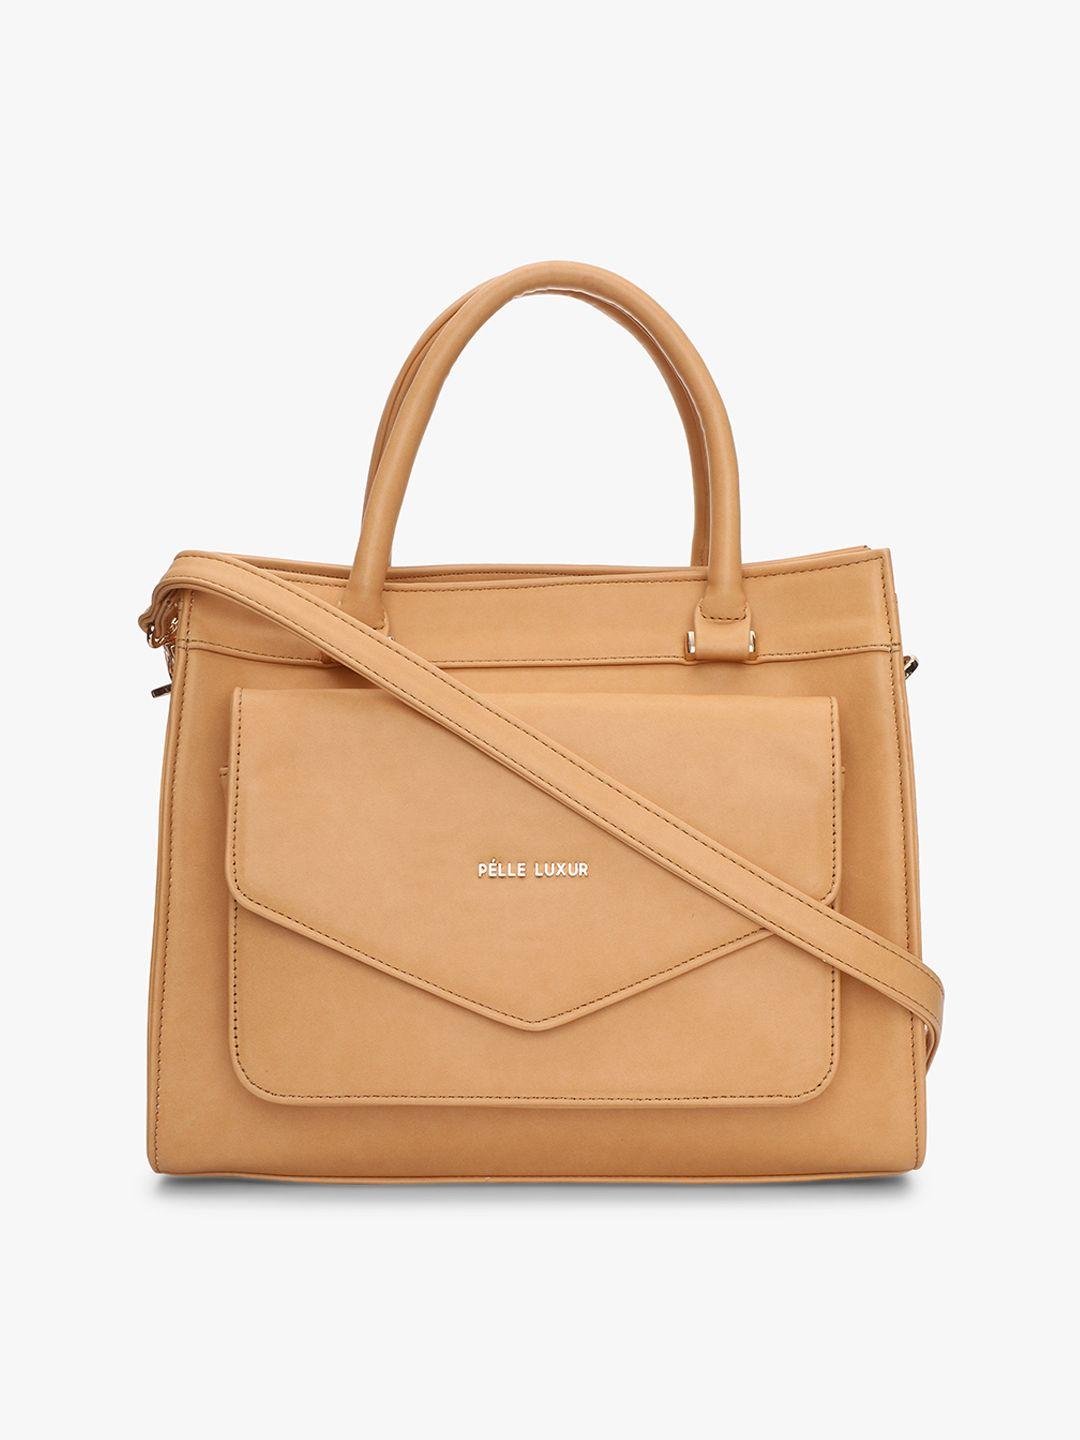 pelle luxur structured handheld bag